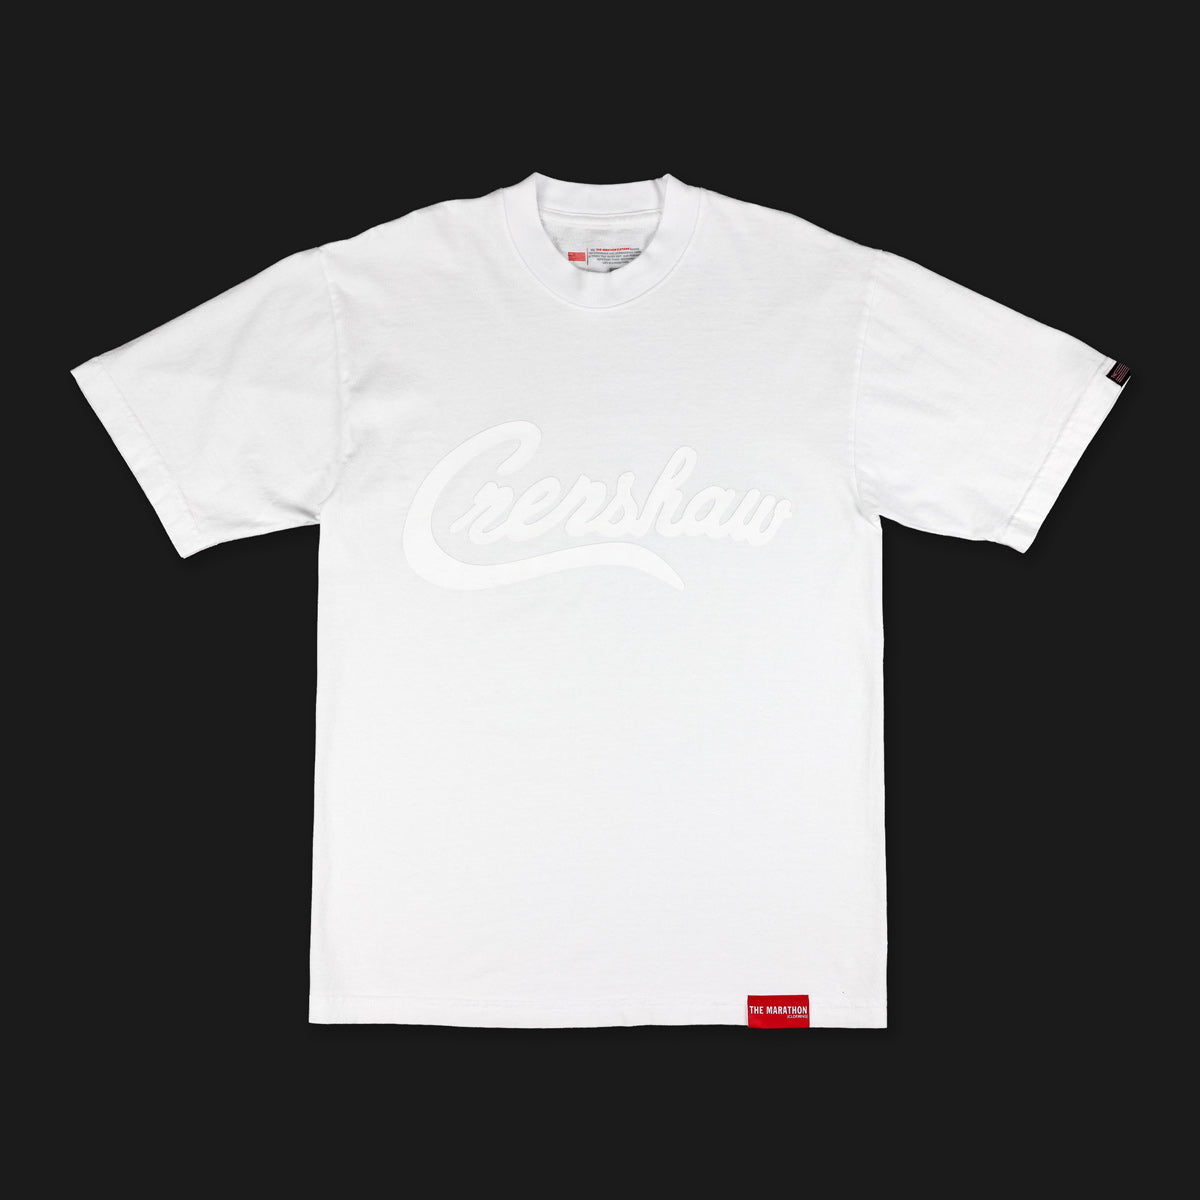 Limited Edition Crenshaw T-Shirt - White/White